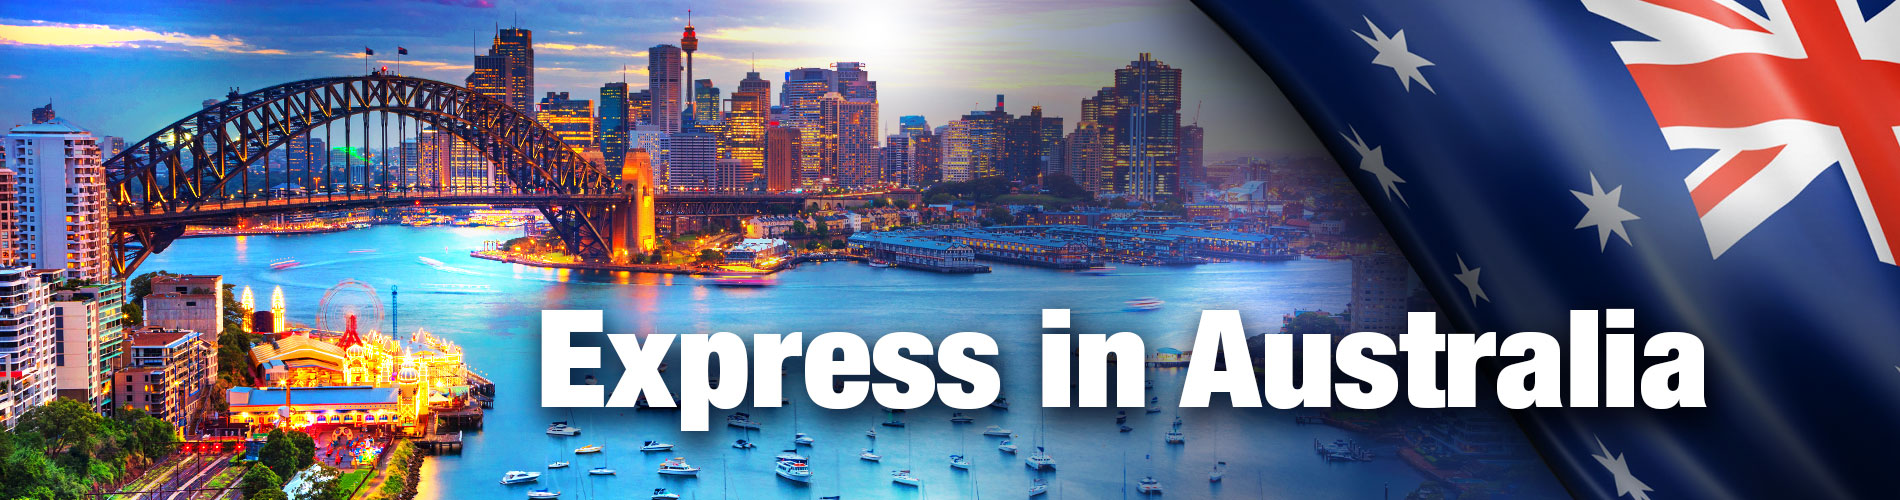 AU_Express-in-Australia_Web-Banner